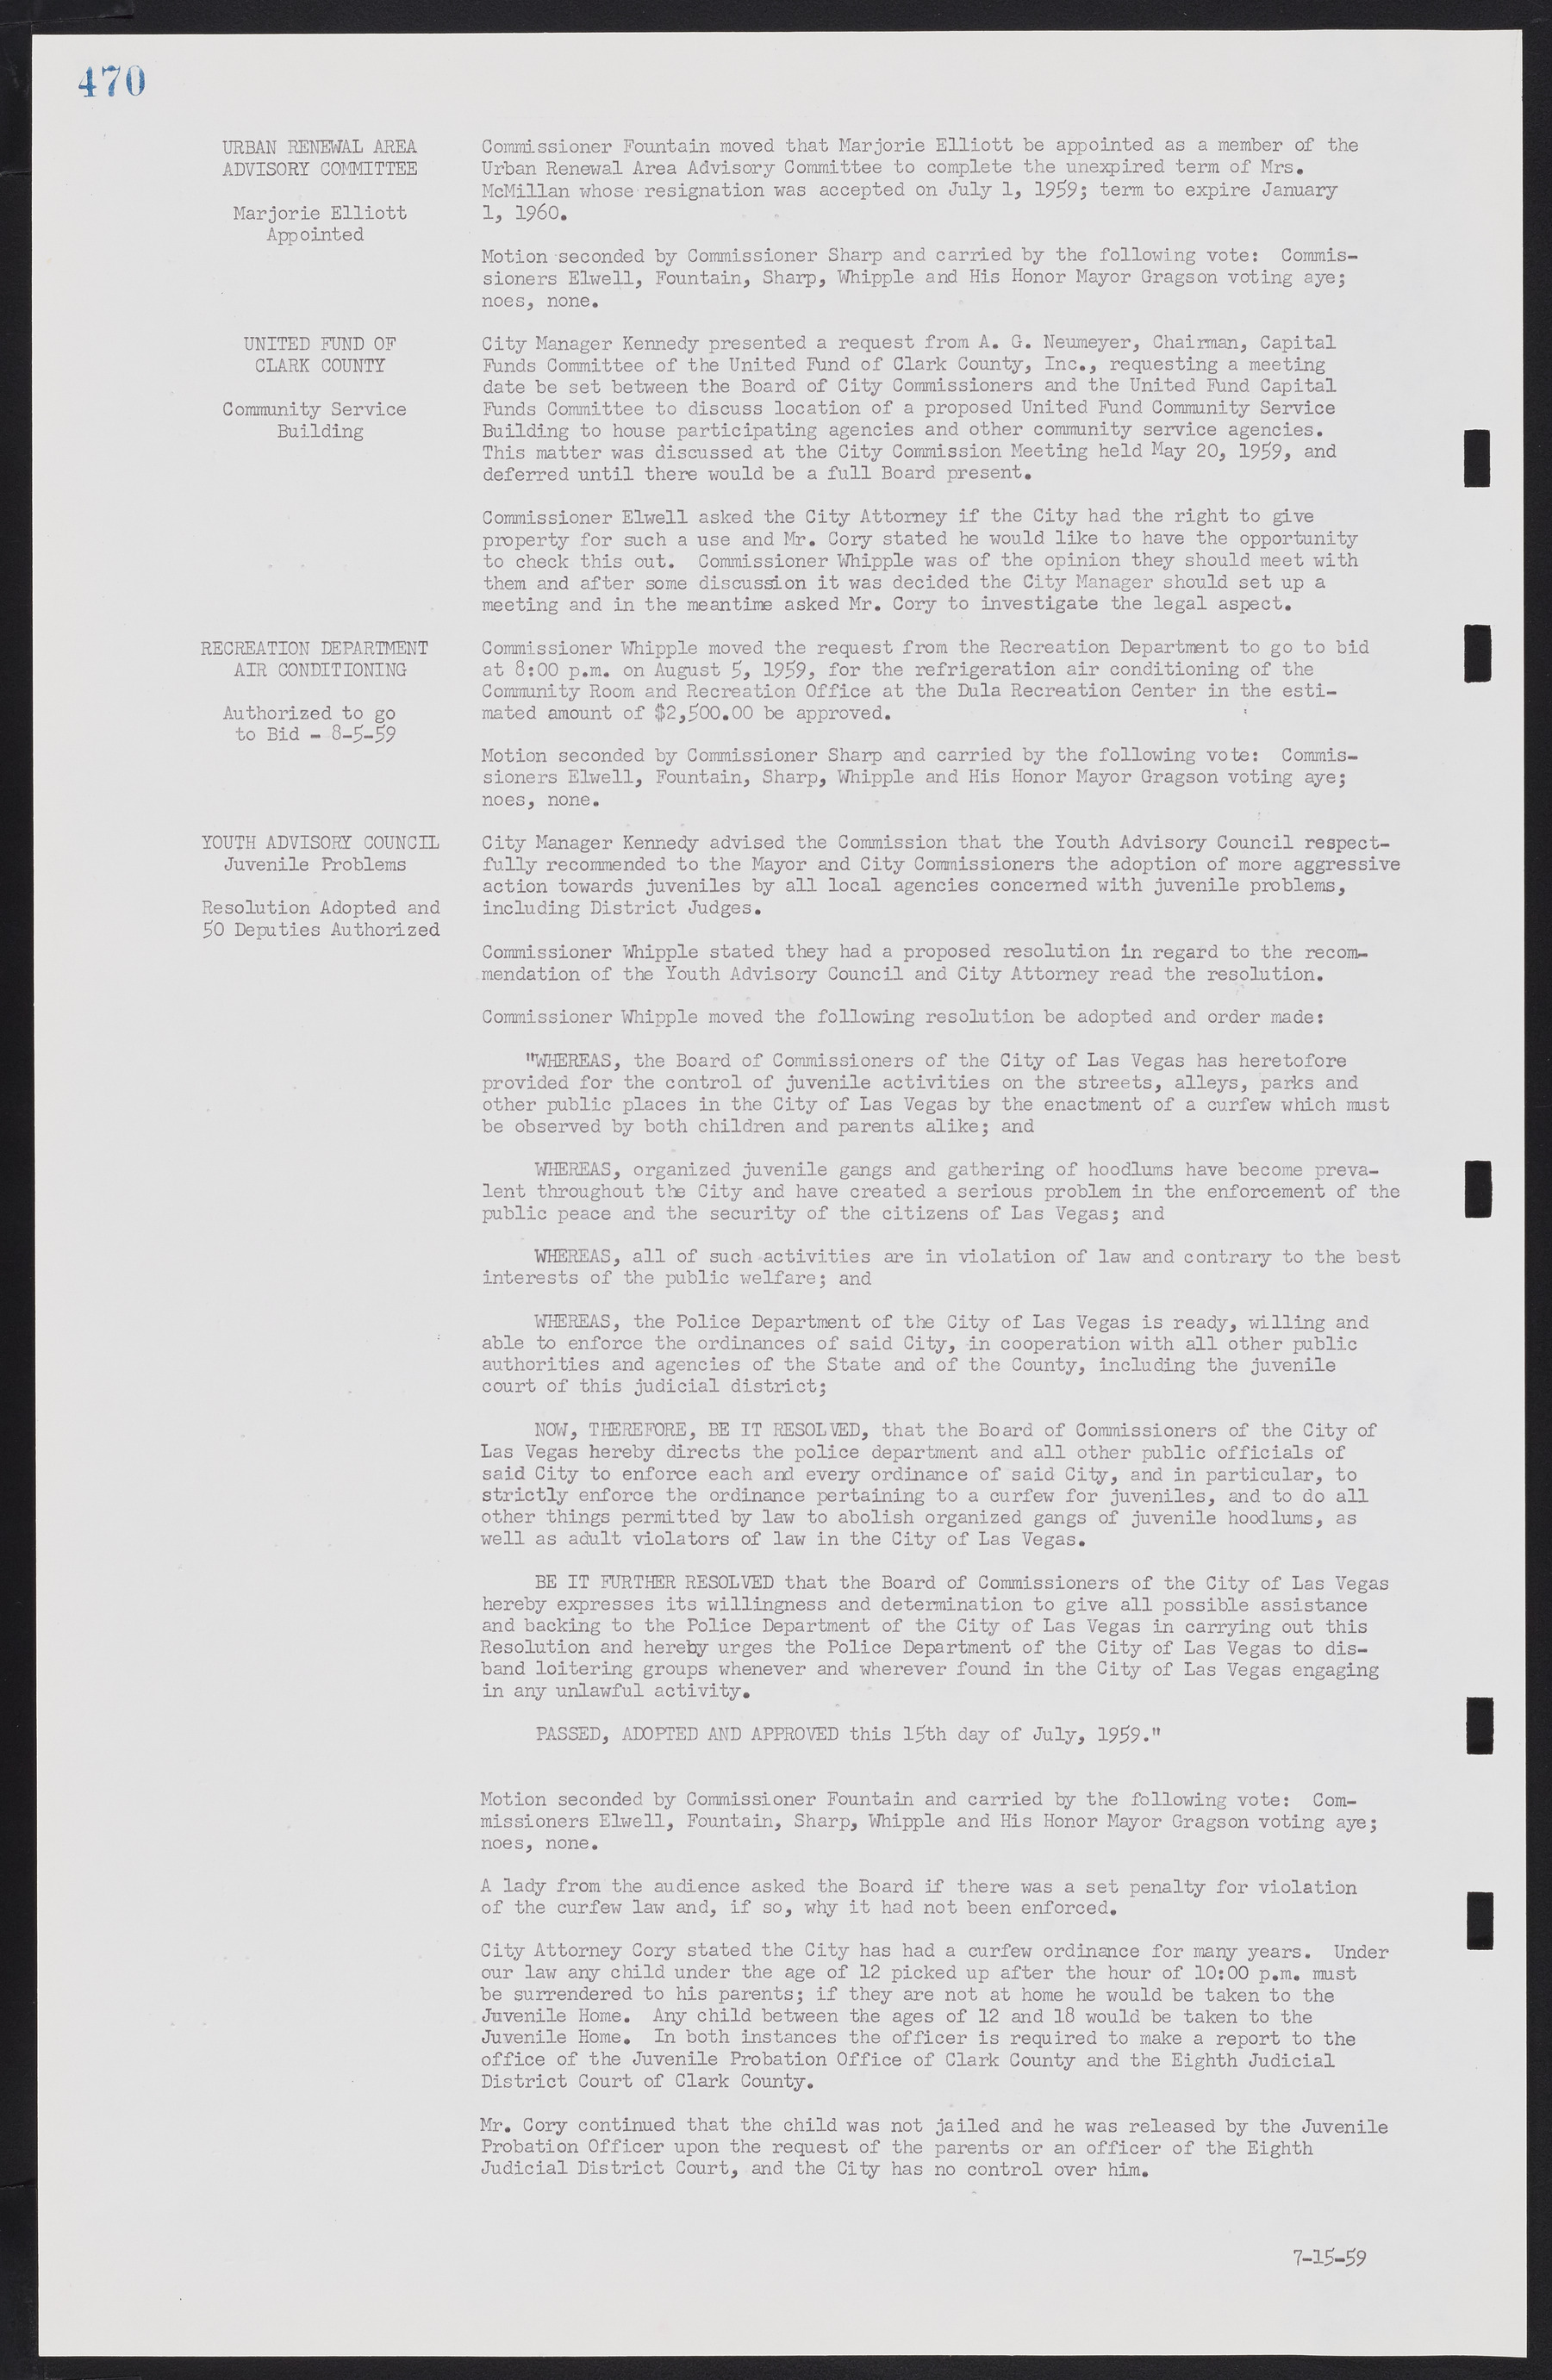 Las Vegas City Commission Minutes, November 20, 1957 to December 2, 1959, lvc000011-506